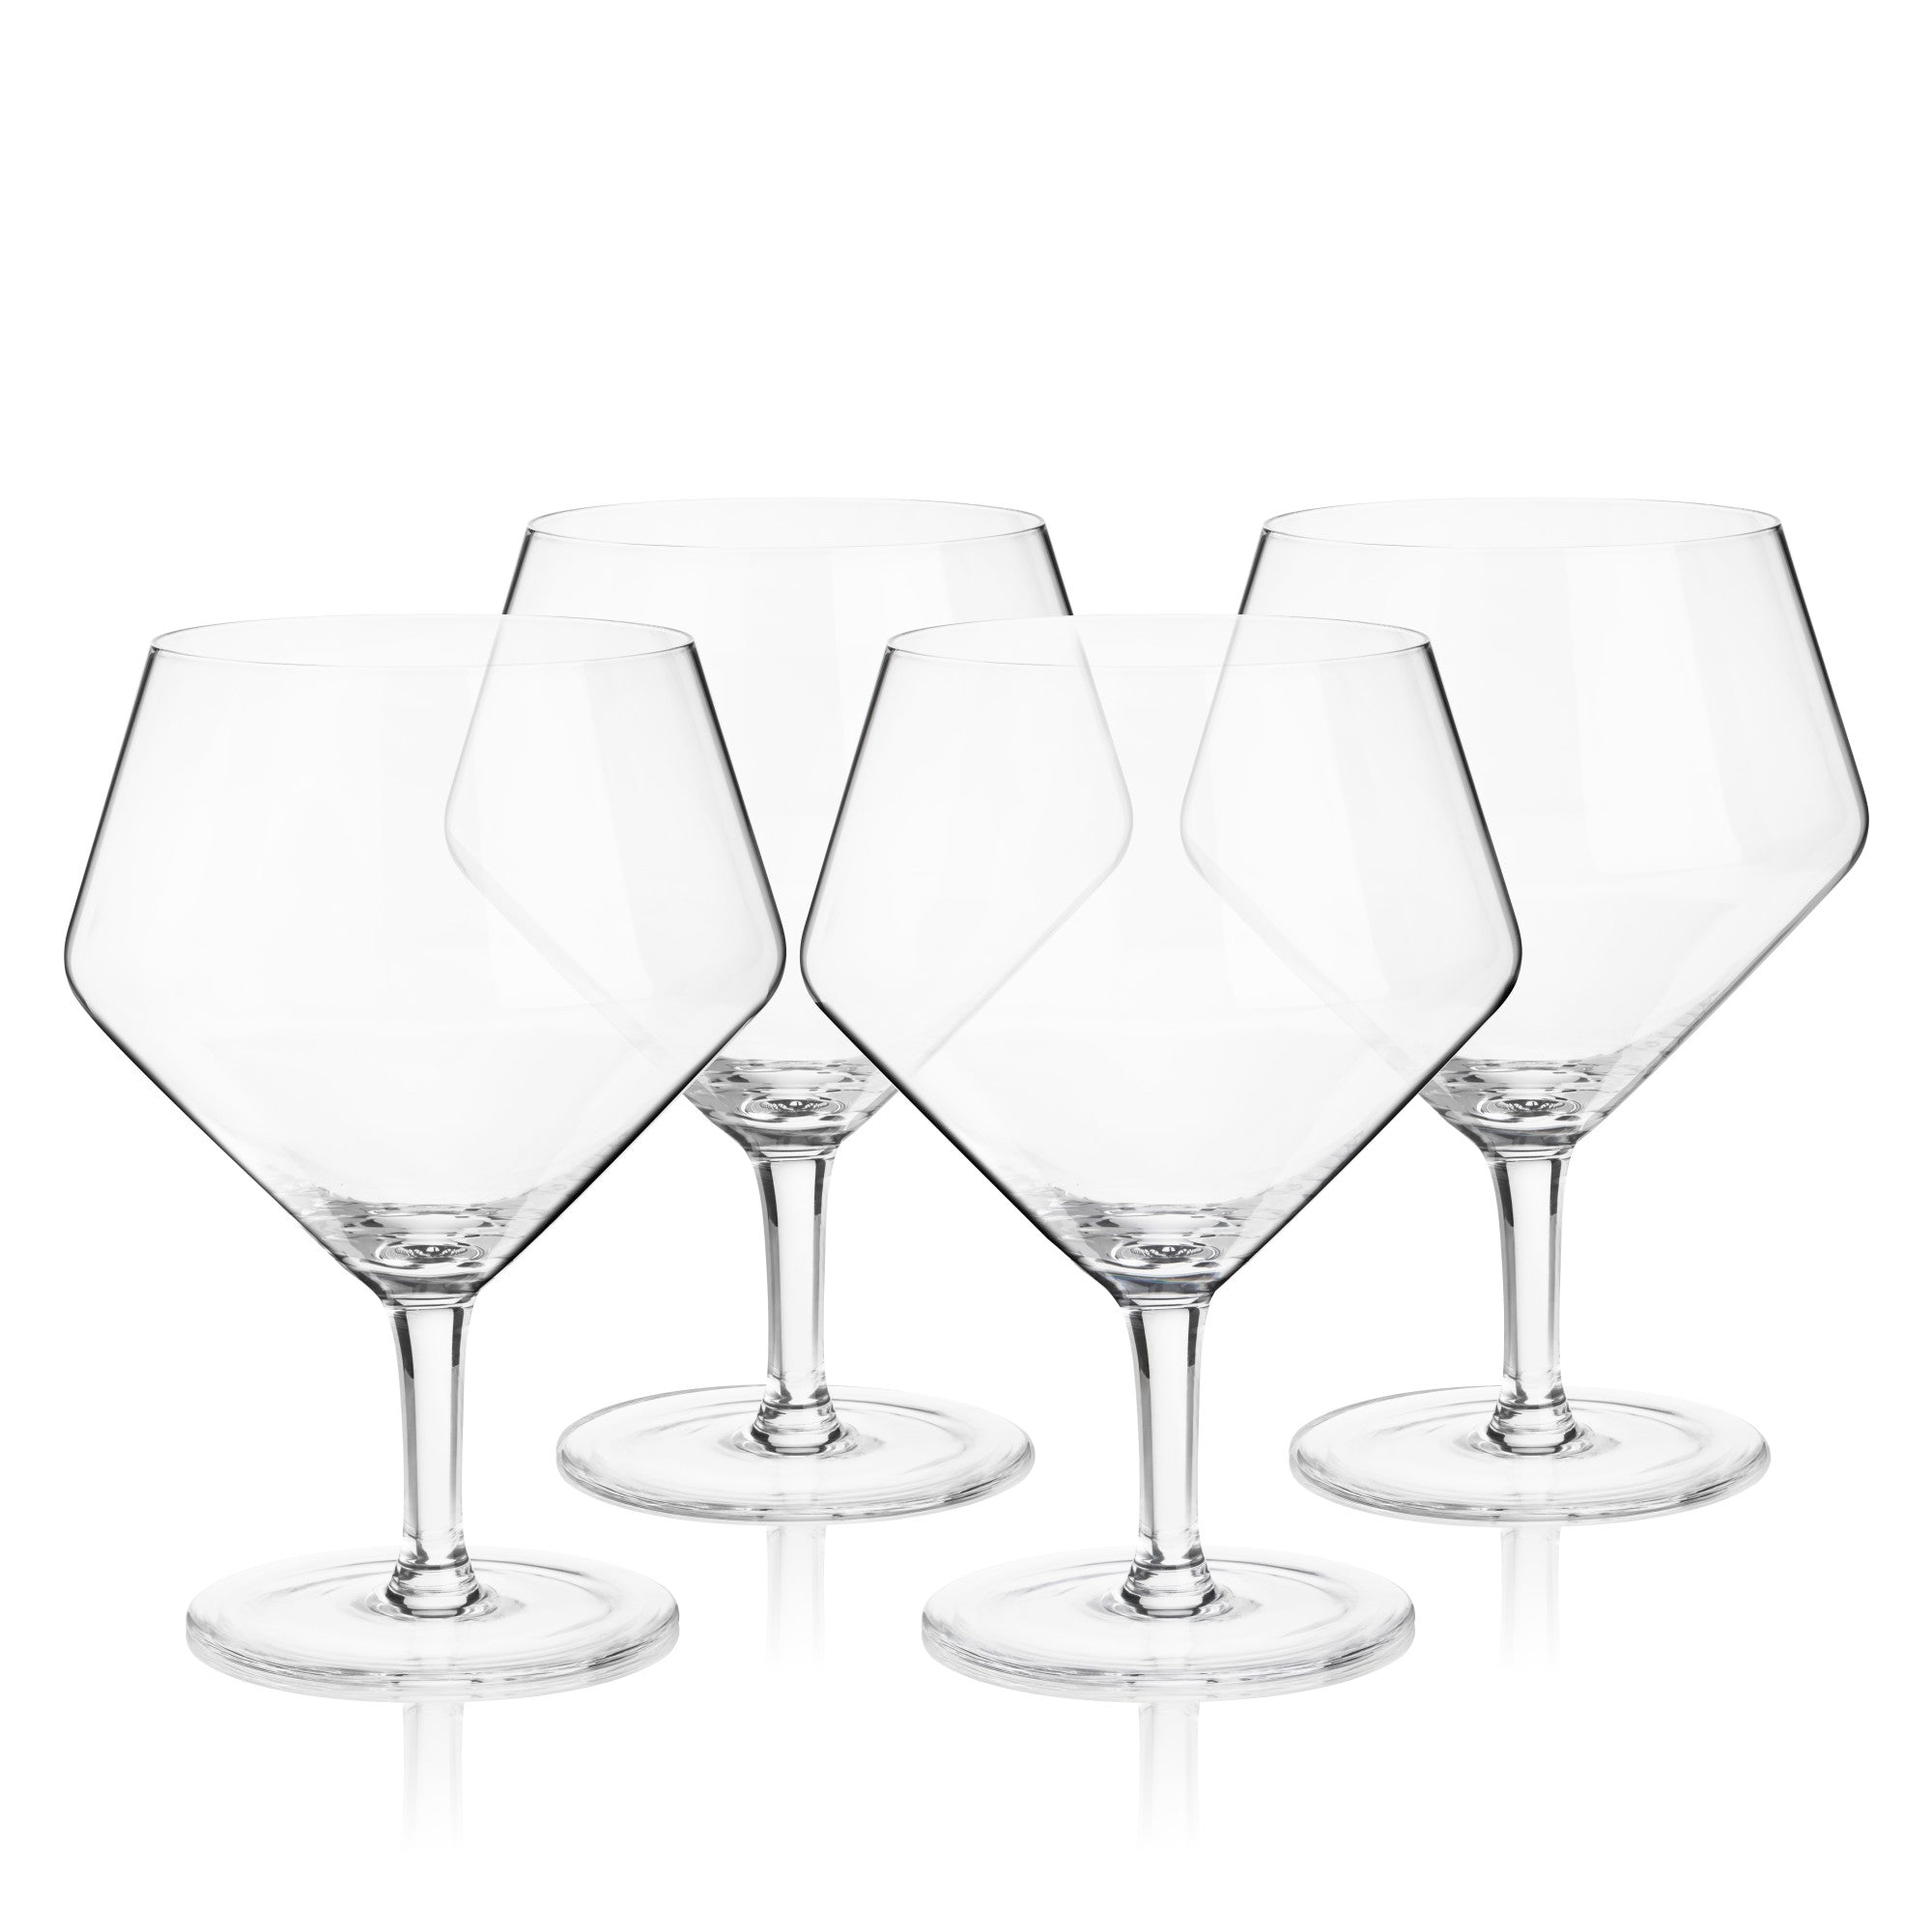 Angled Crystal Gin & Tonic Glasses by Viski® (set of 4)